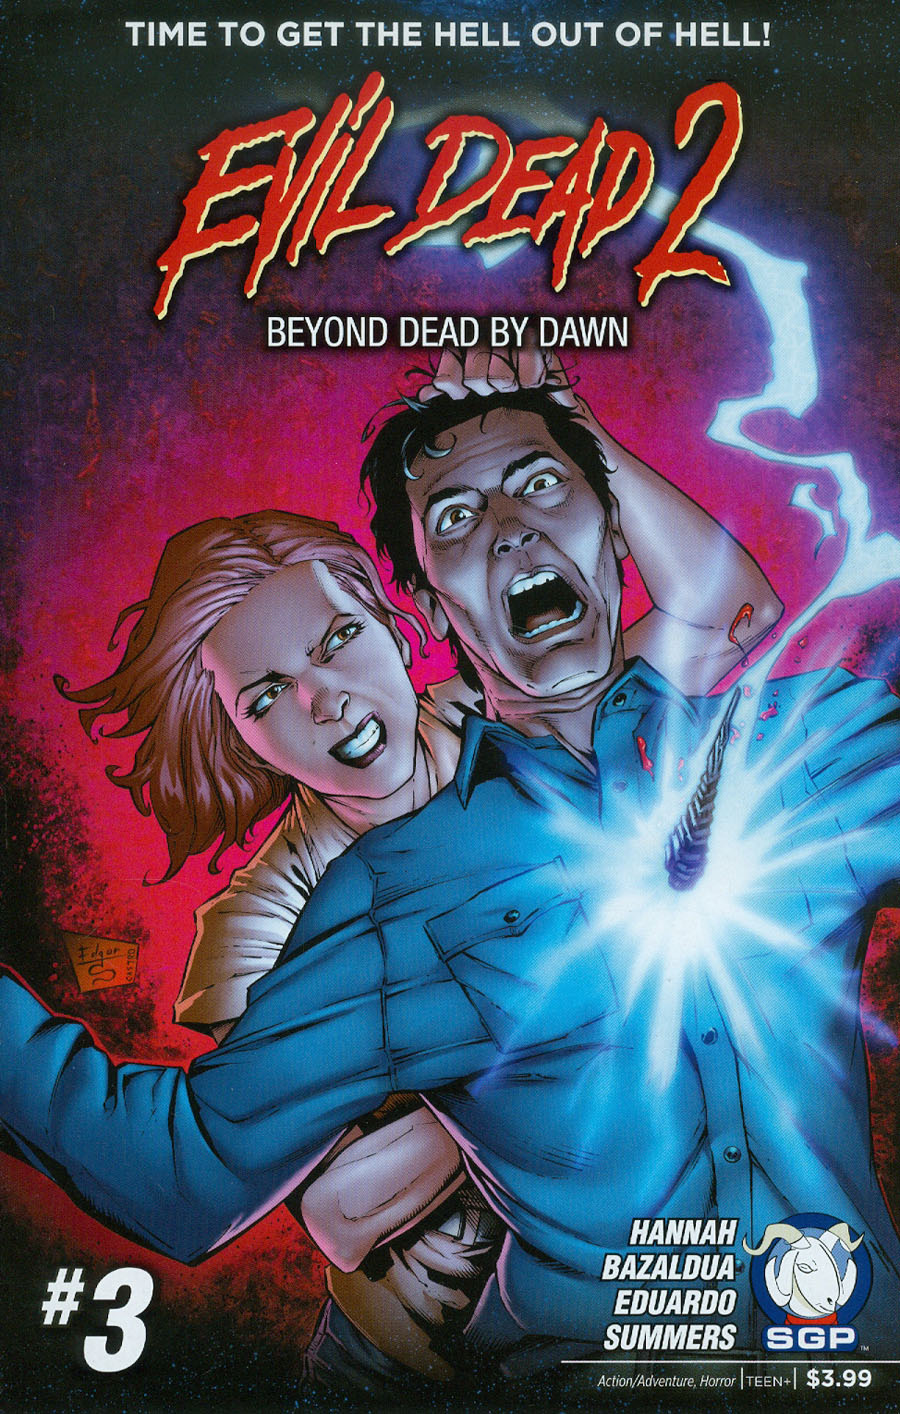 Evil Dead 2 Beyond Dead By Dawn #3